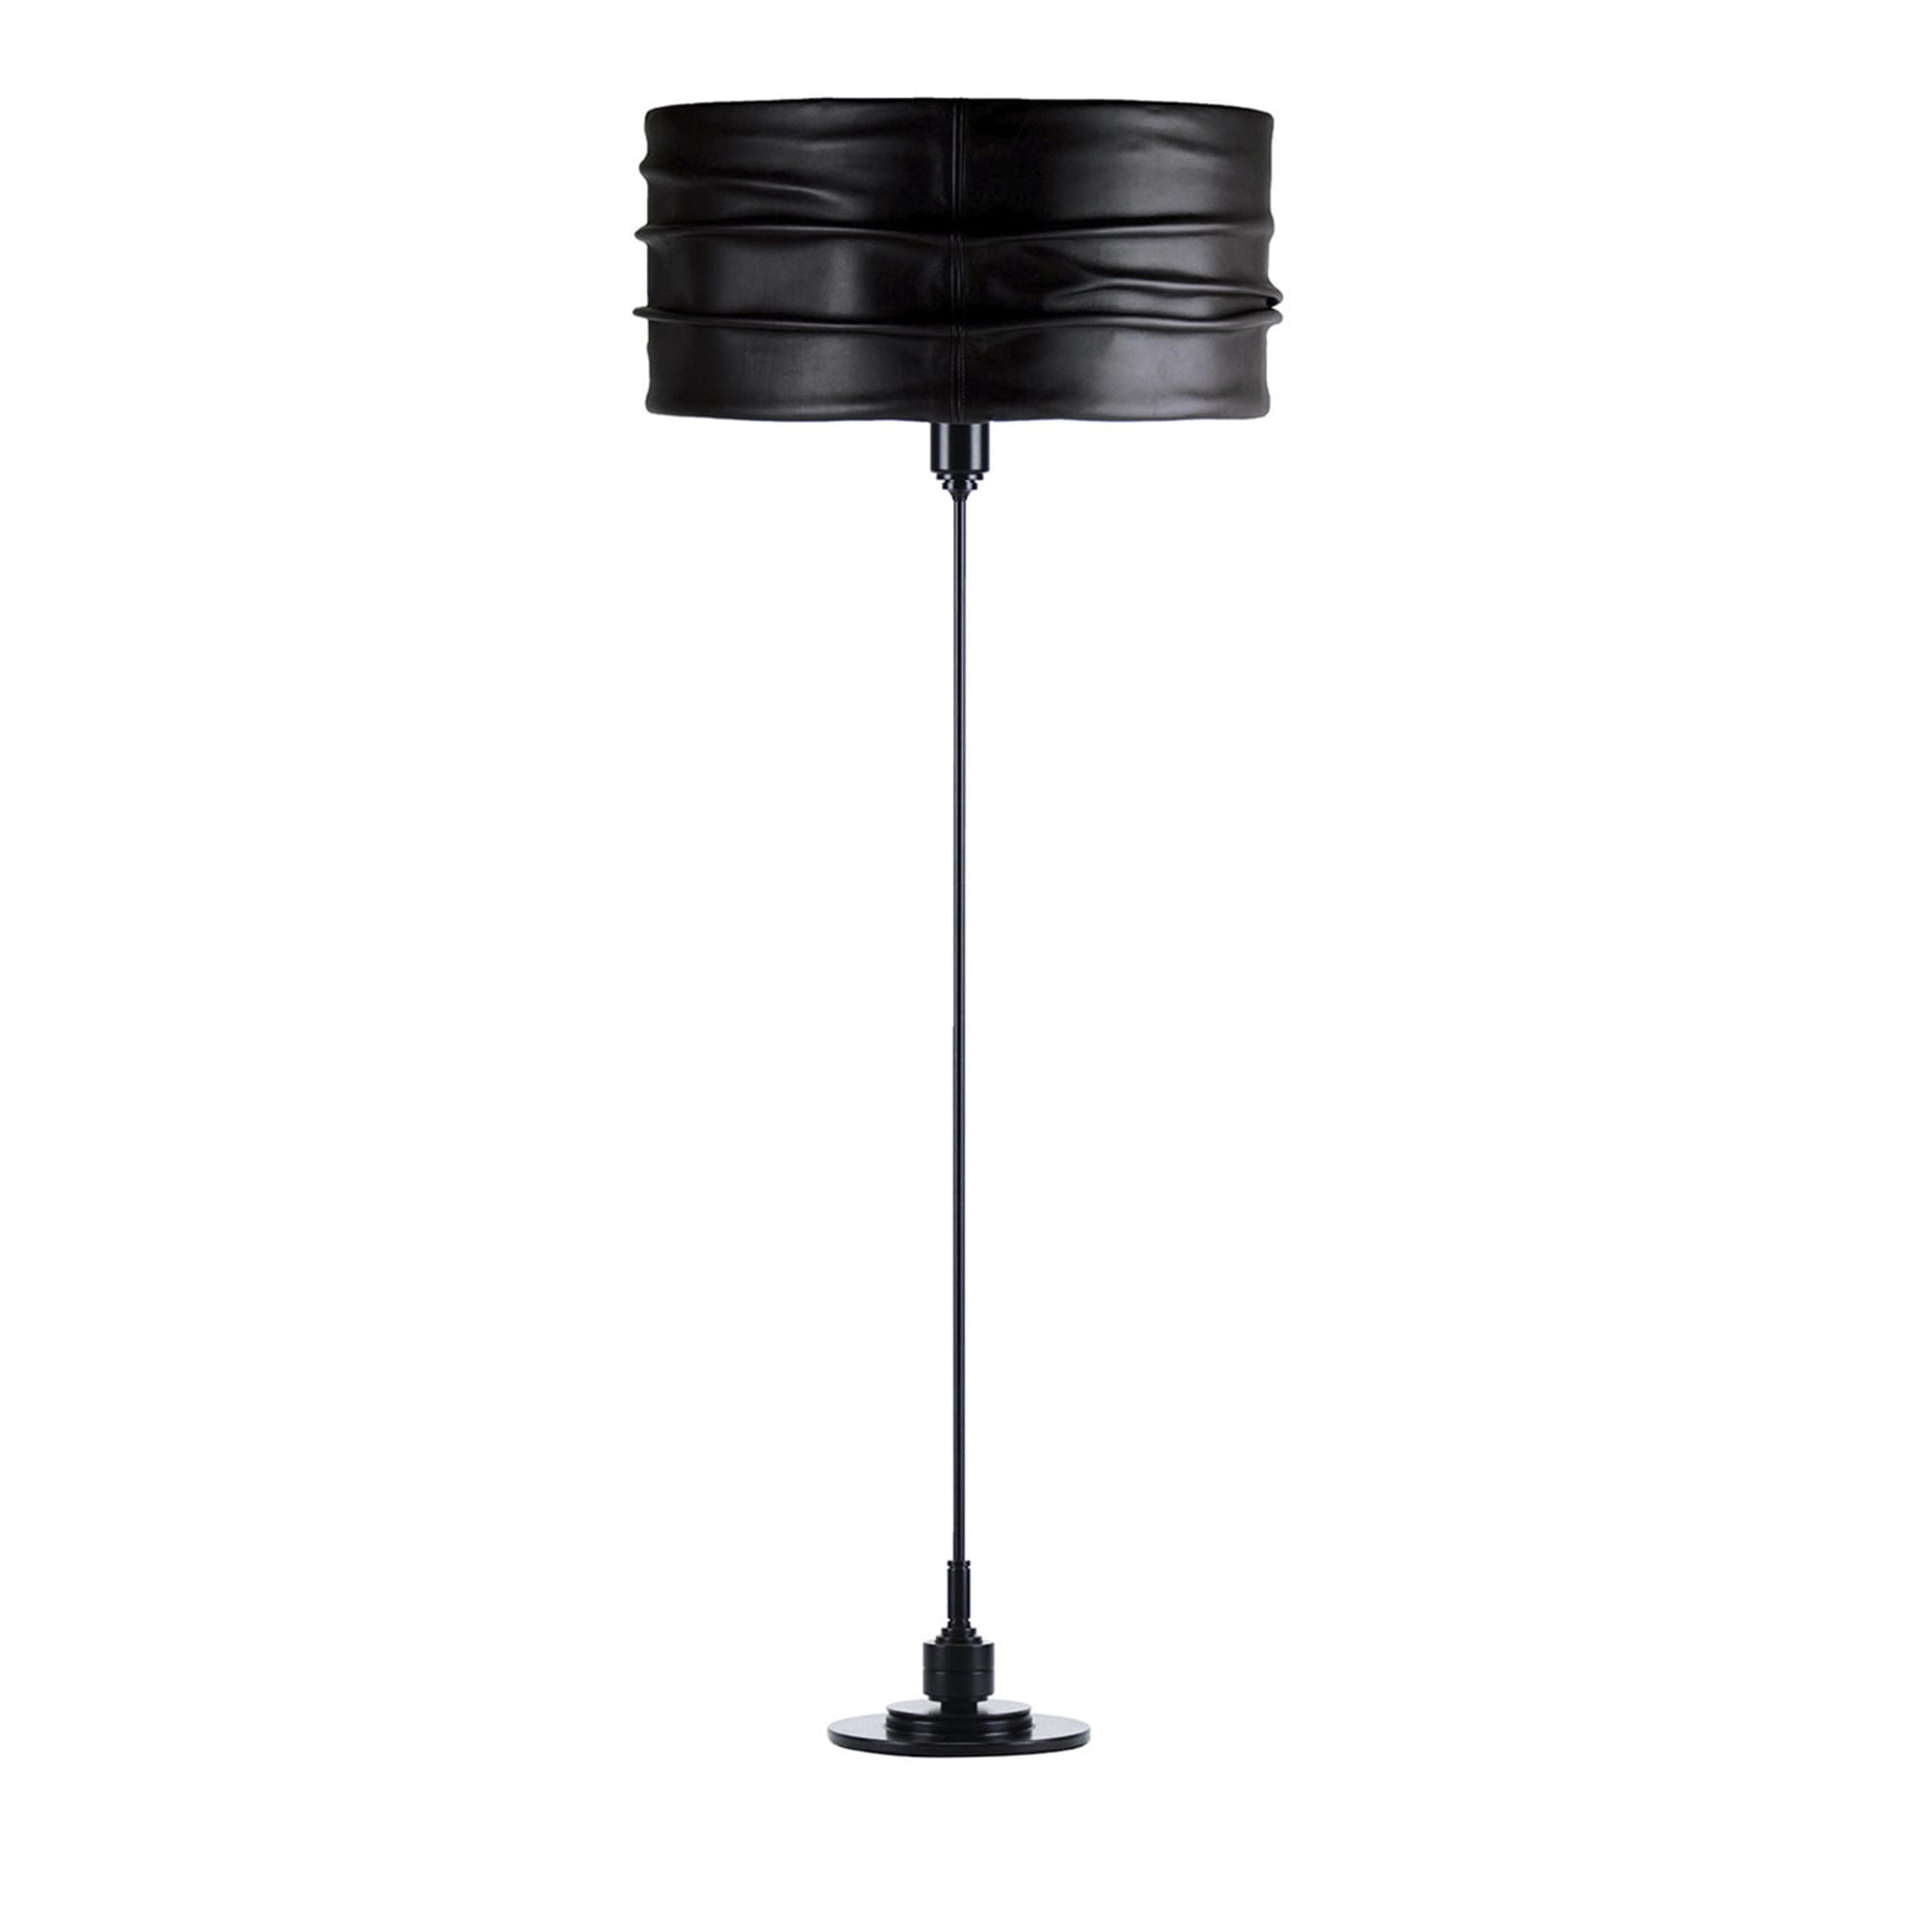 Semele Black Leather Floor Lamp #1 - Main view